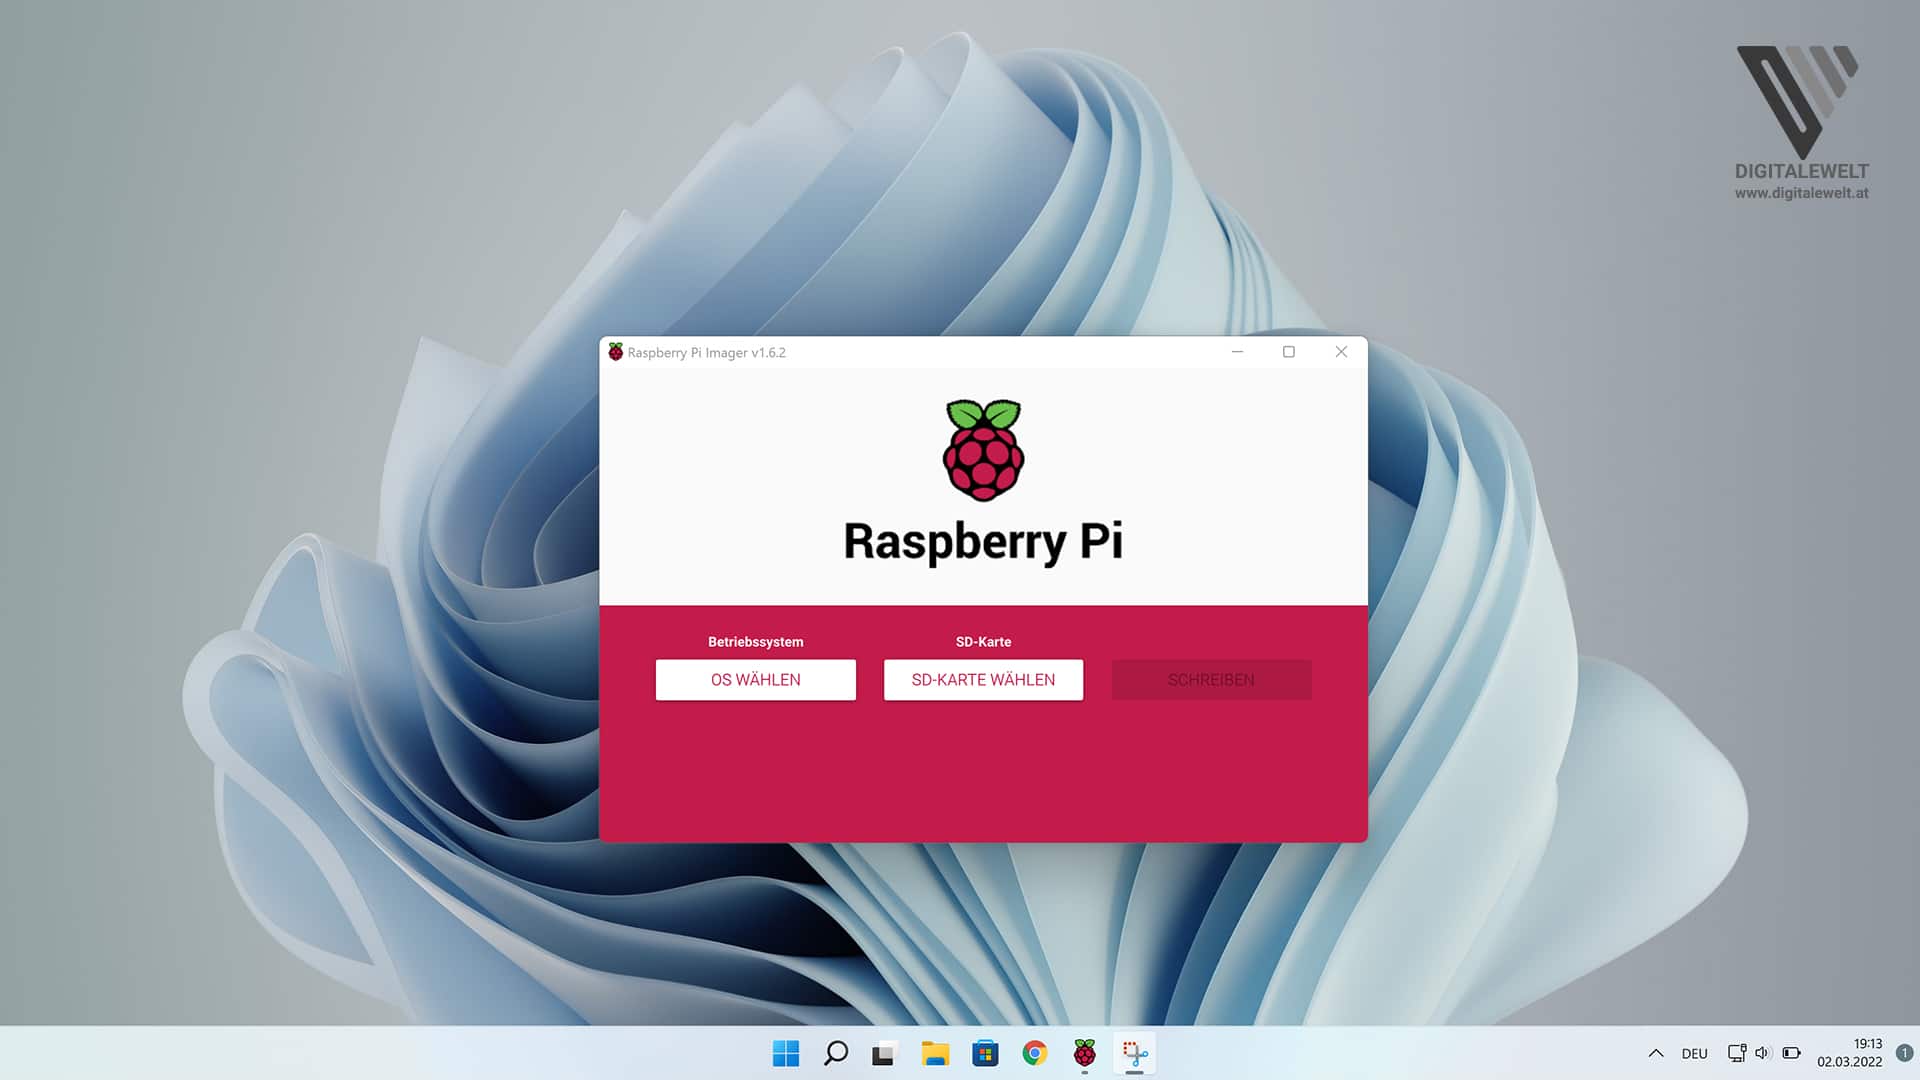 Raspberry Pi OS installieren - Raspberry Pi Imager Tool - digitalewelt.at